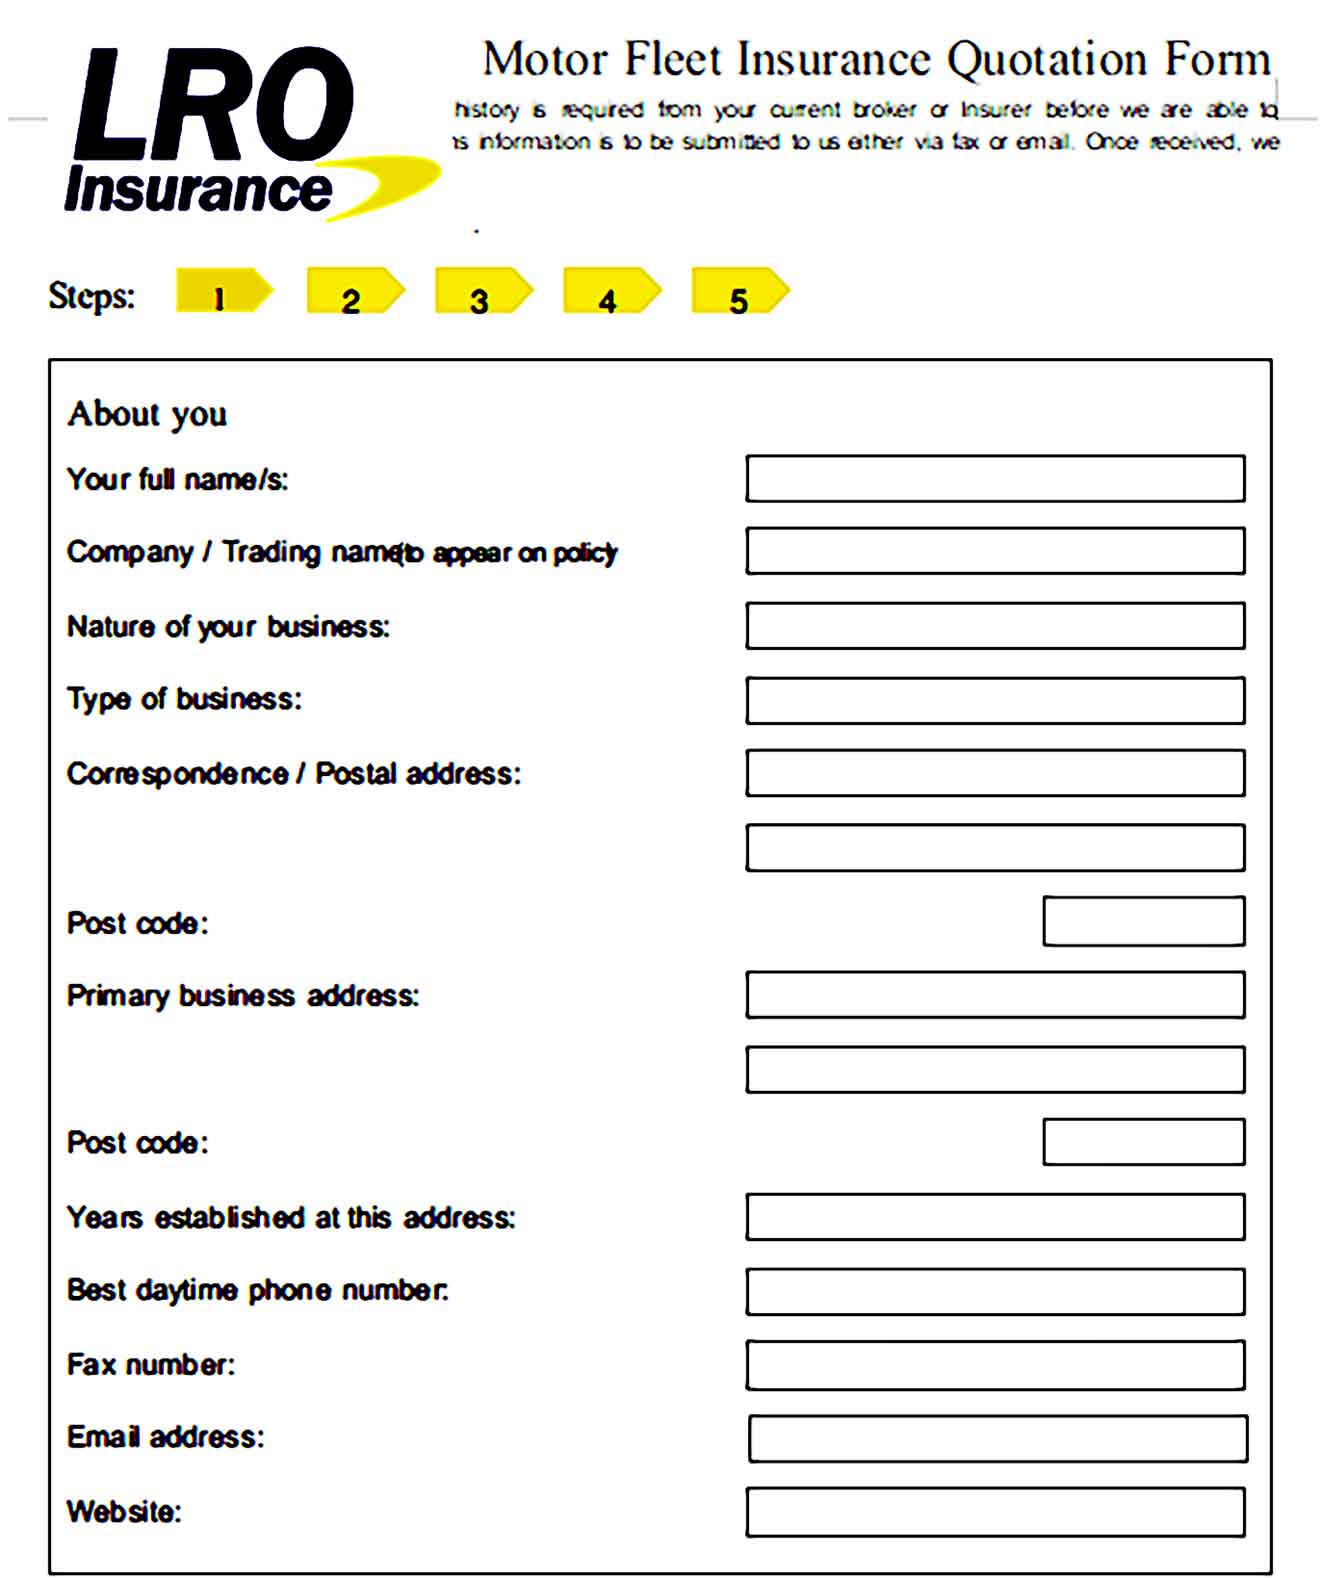 Motor Fleet Insurance Quotation Form